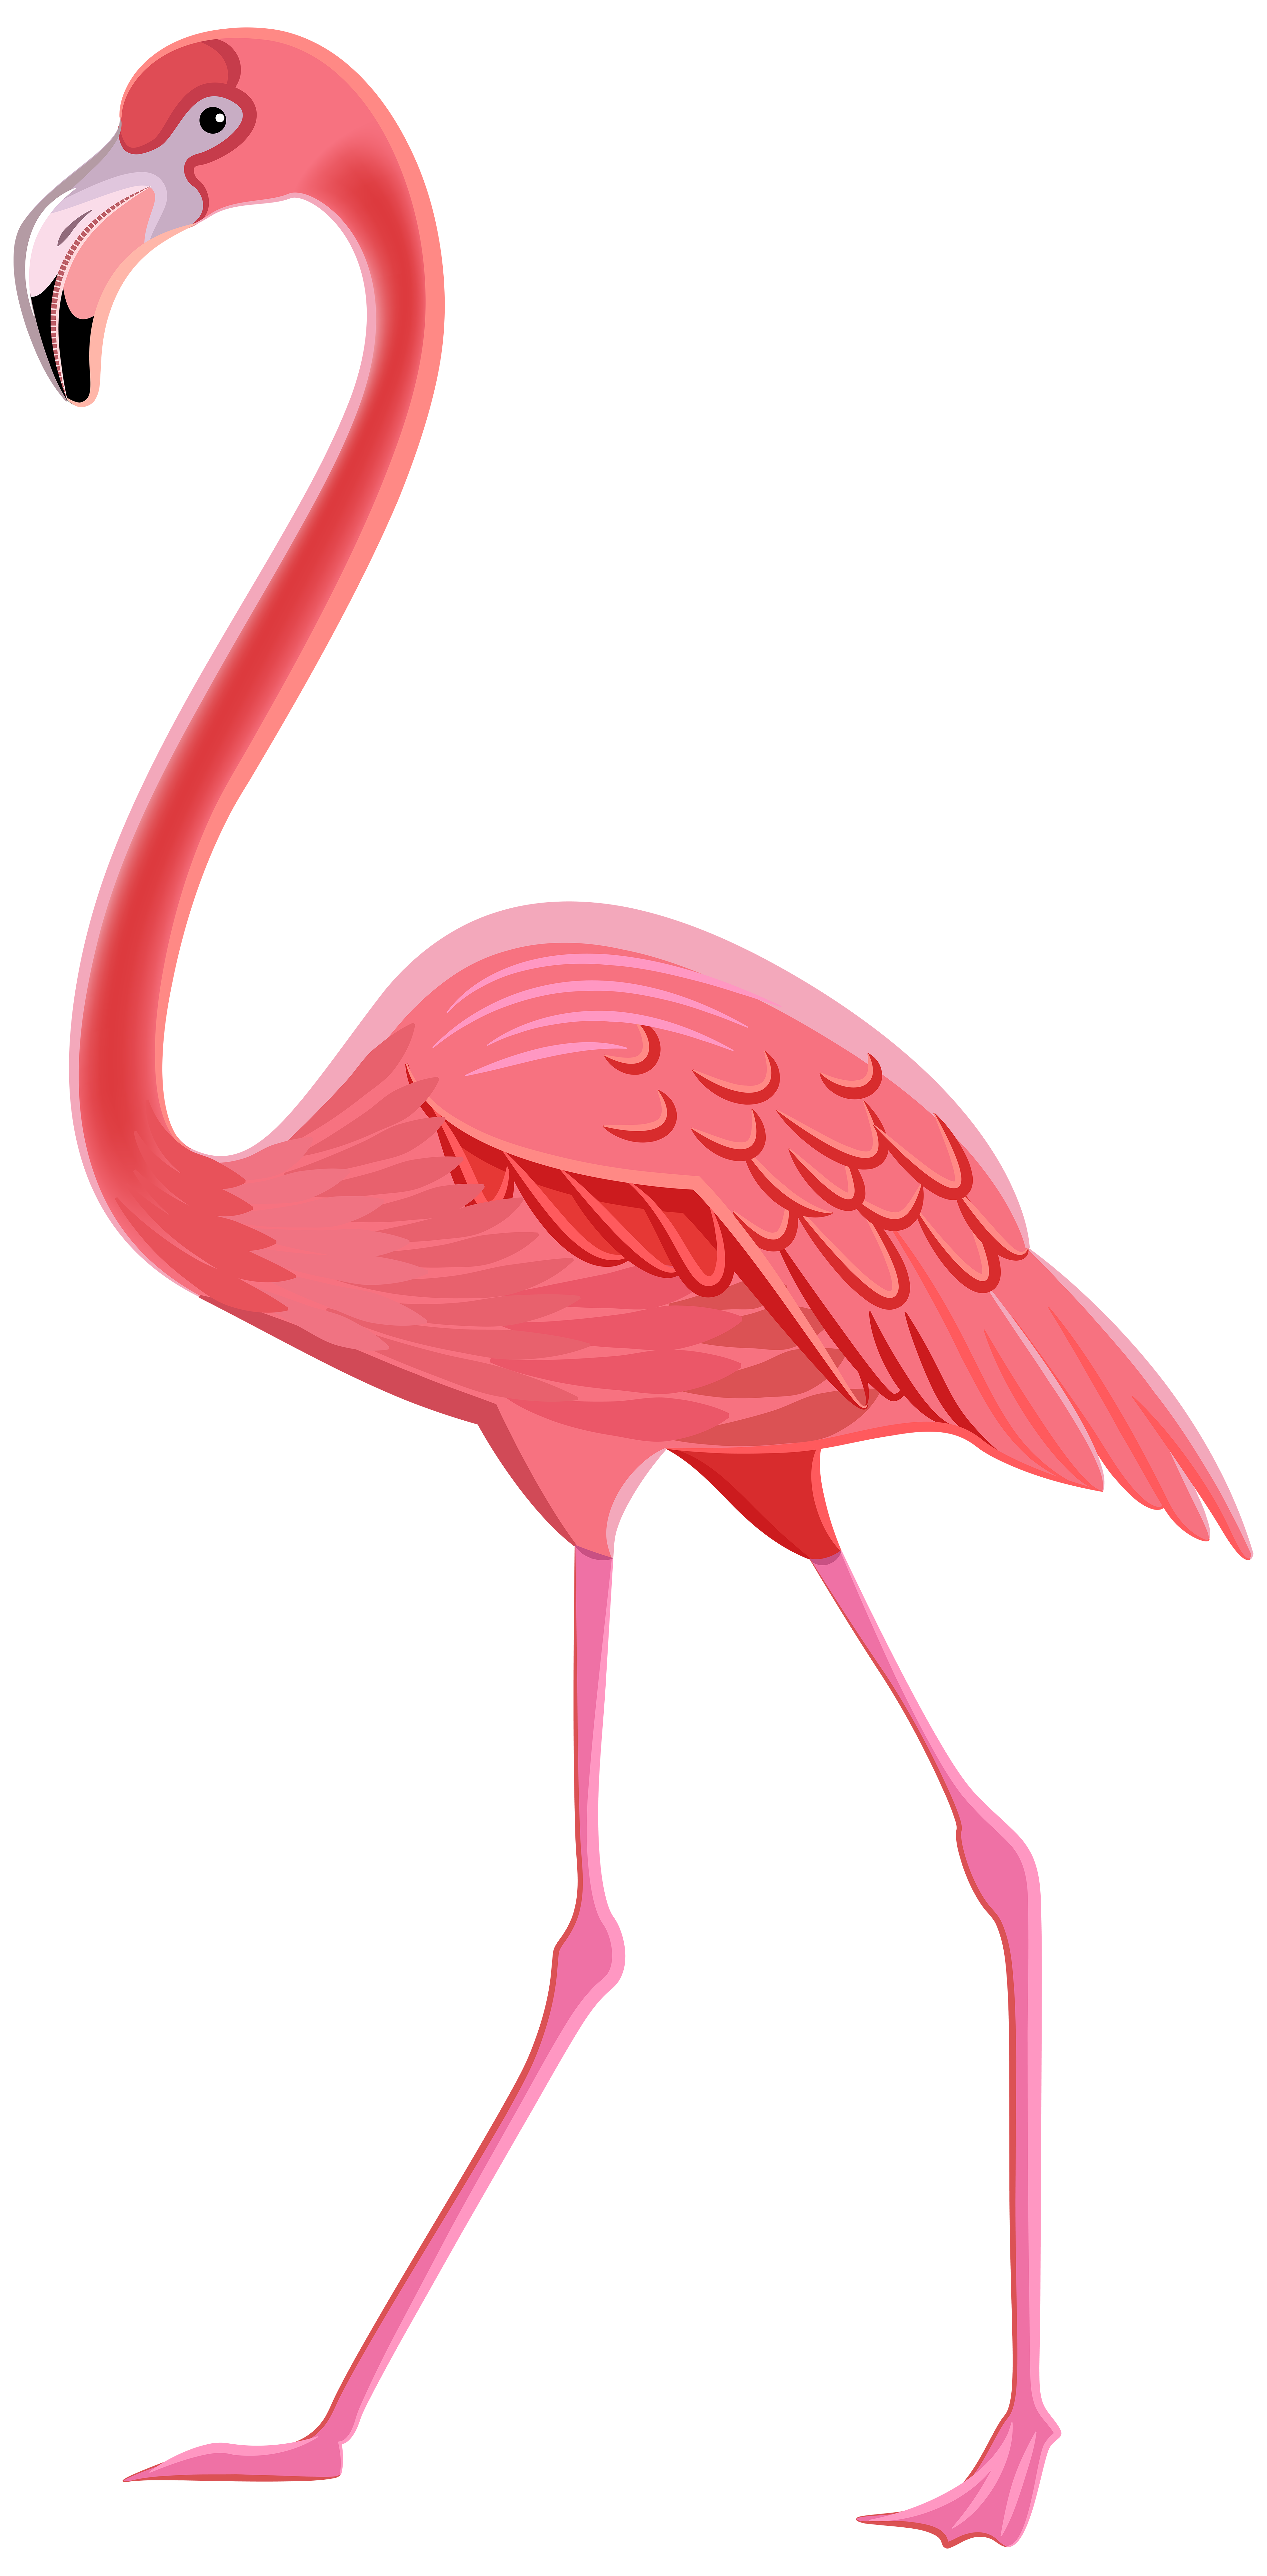 Flamingo PNG Transparent Clip Art Image